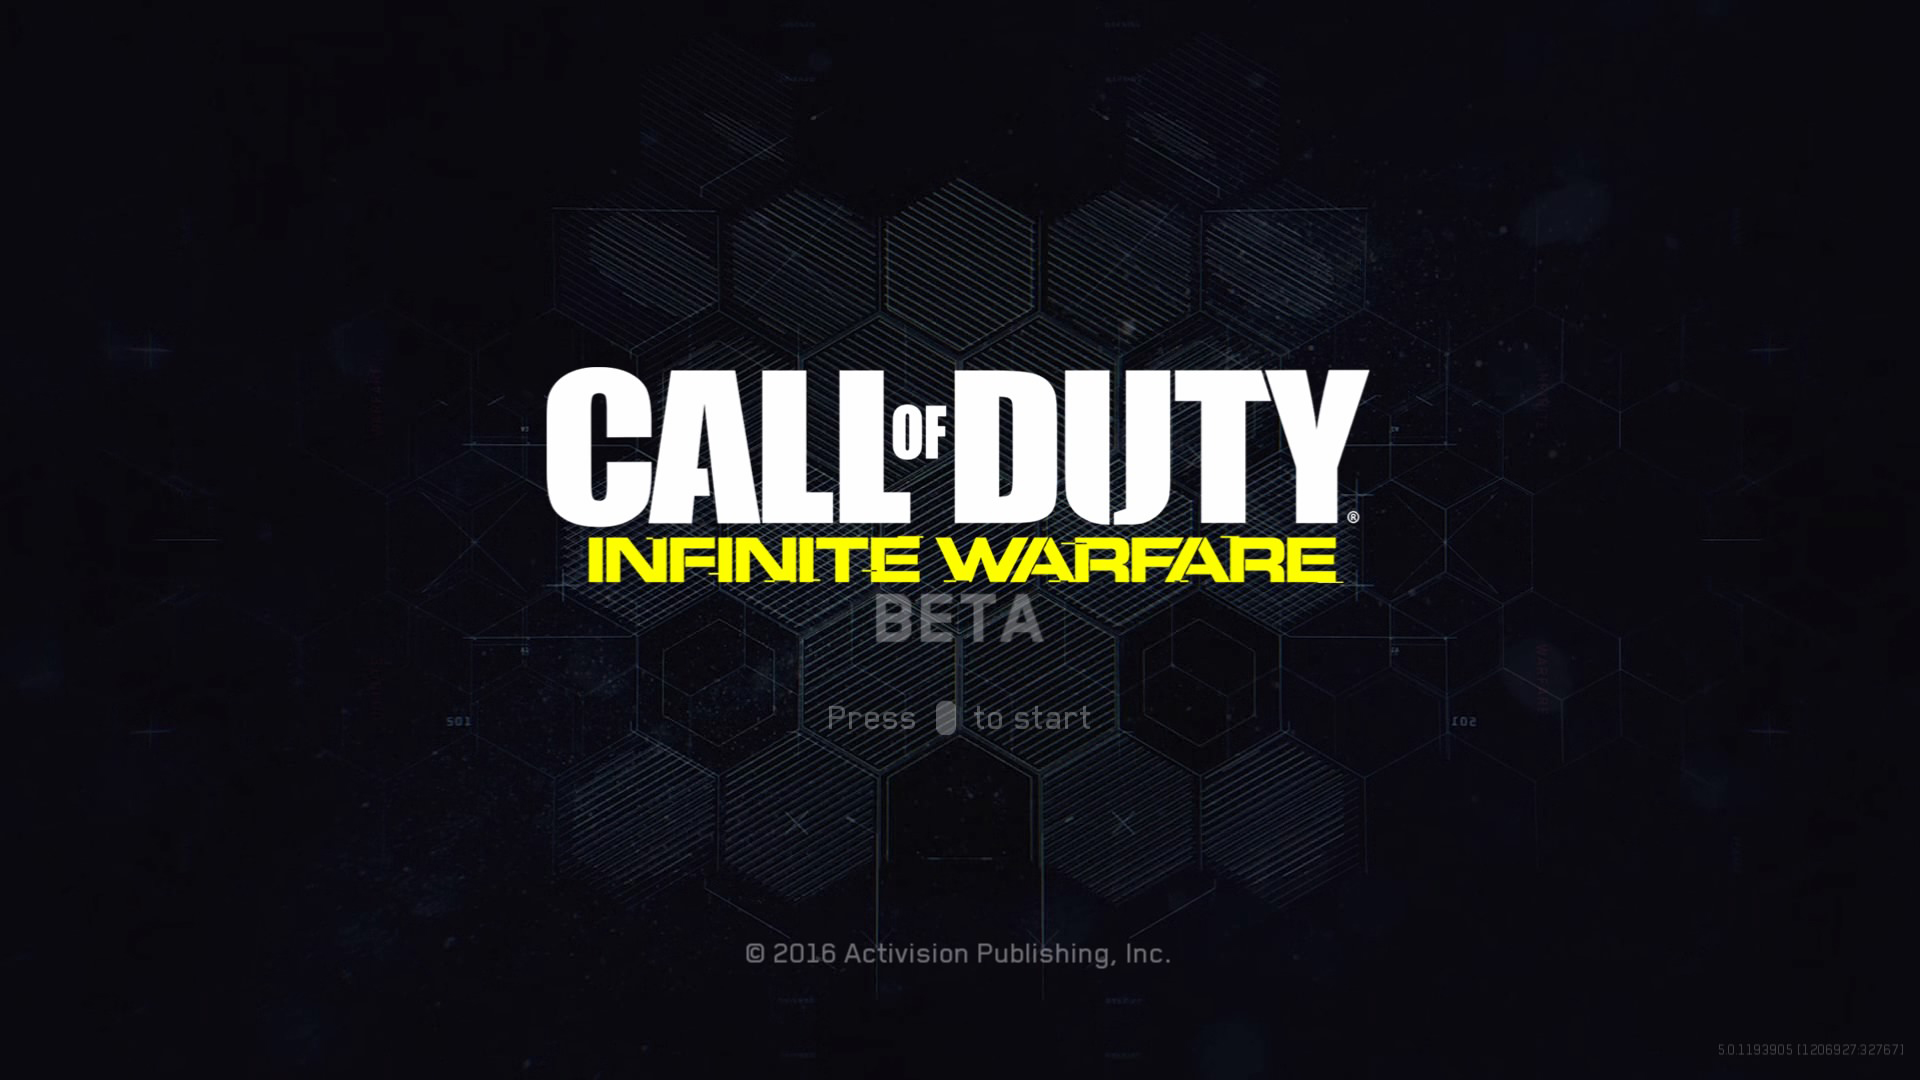 'Call of Duty: Infinite Warfare' PS4 Multiplayer Beta start screen